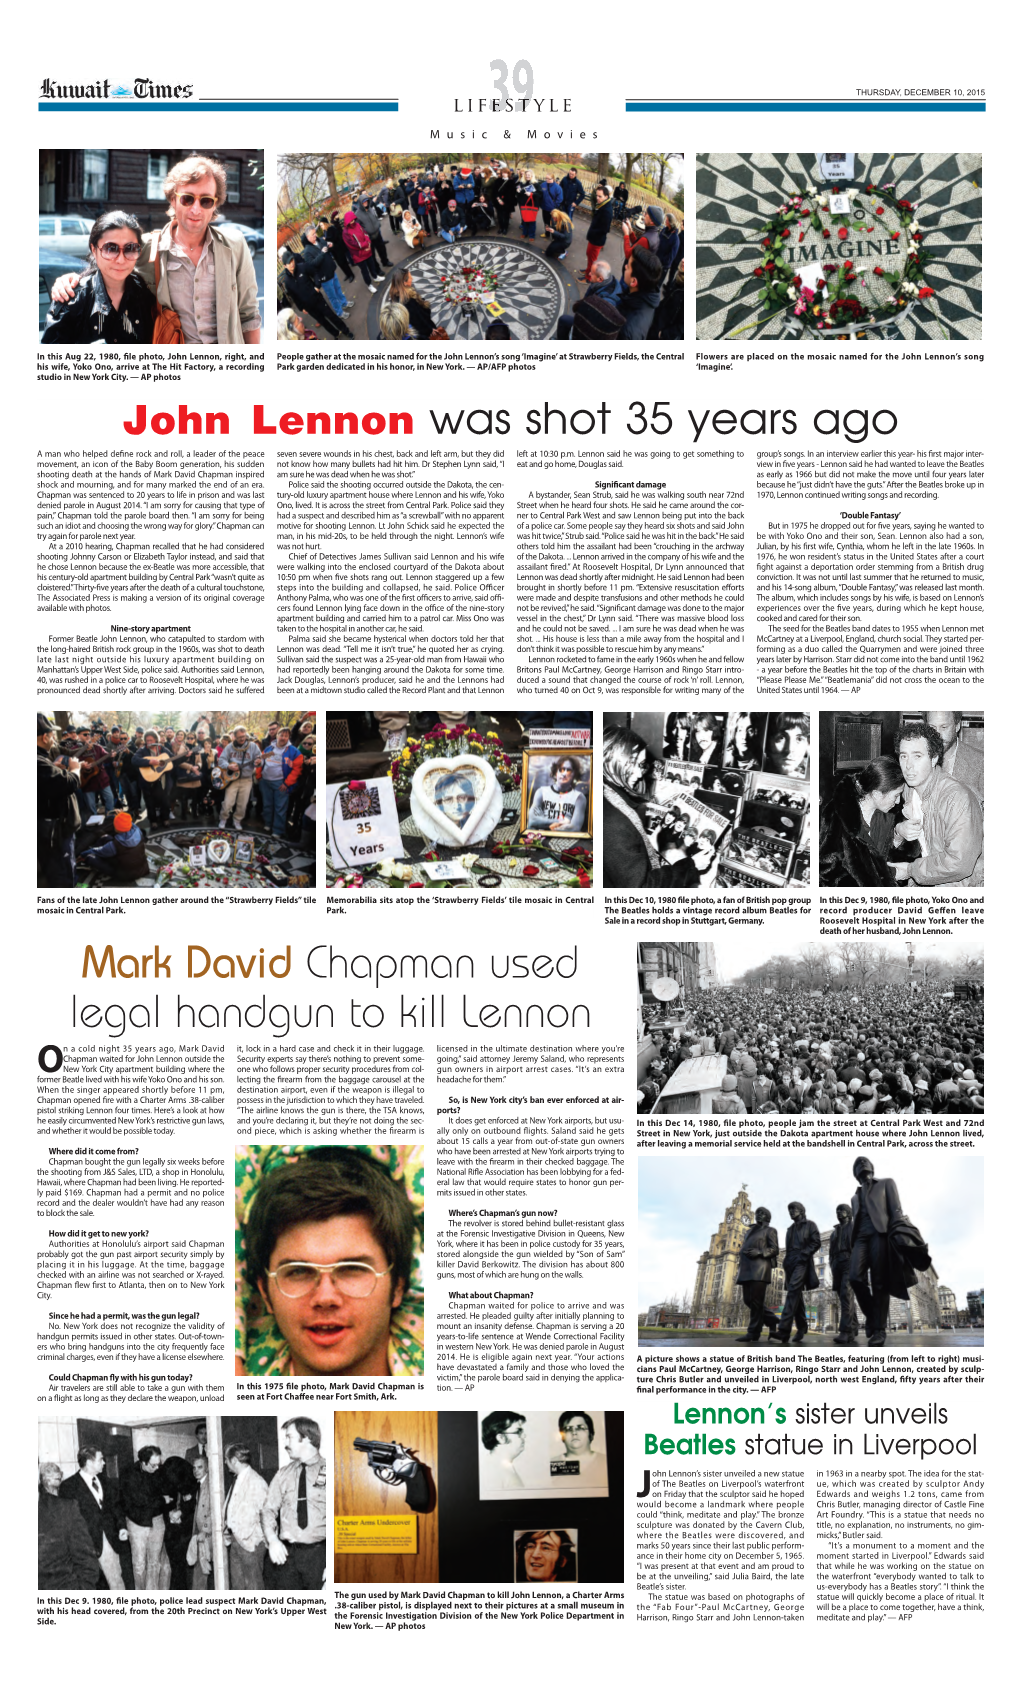 Mark David Chapman Used Legal Handgun to Kill Lennon